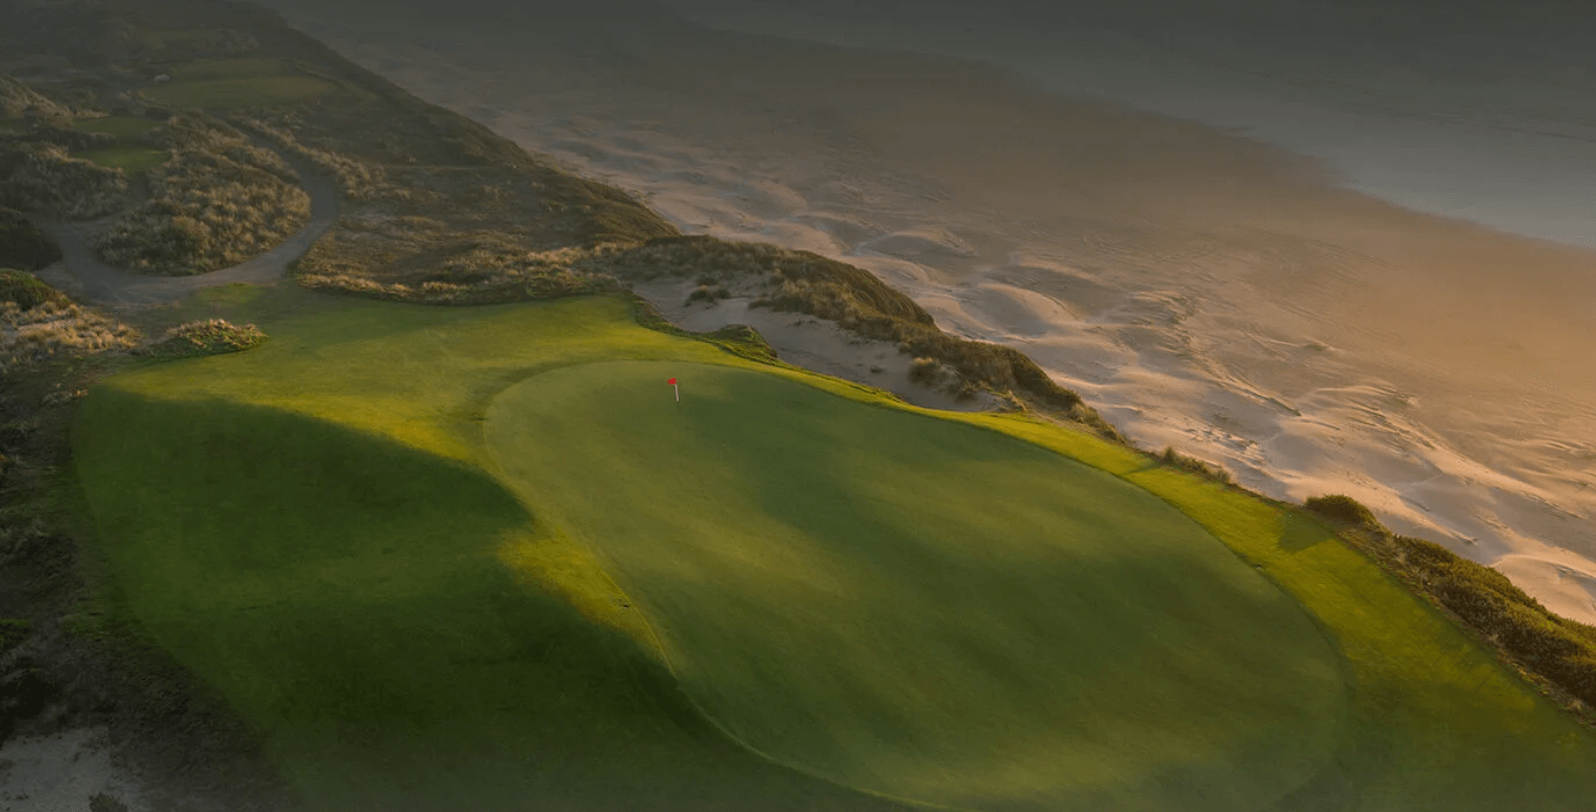 Bandon Dunes Golf Resort